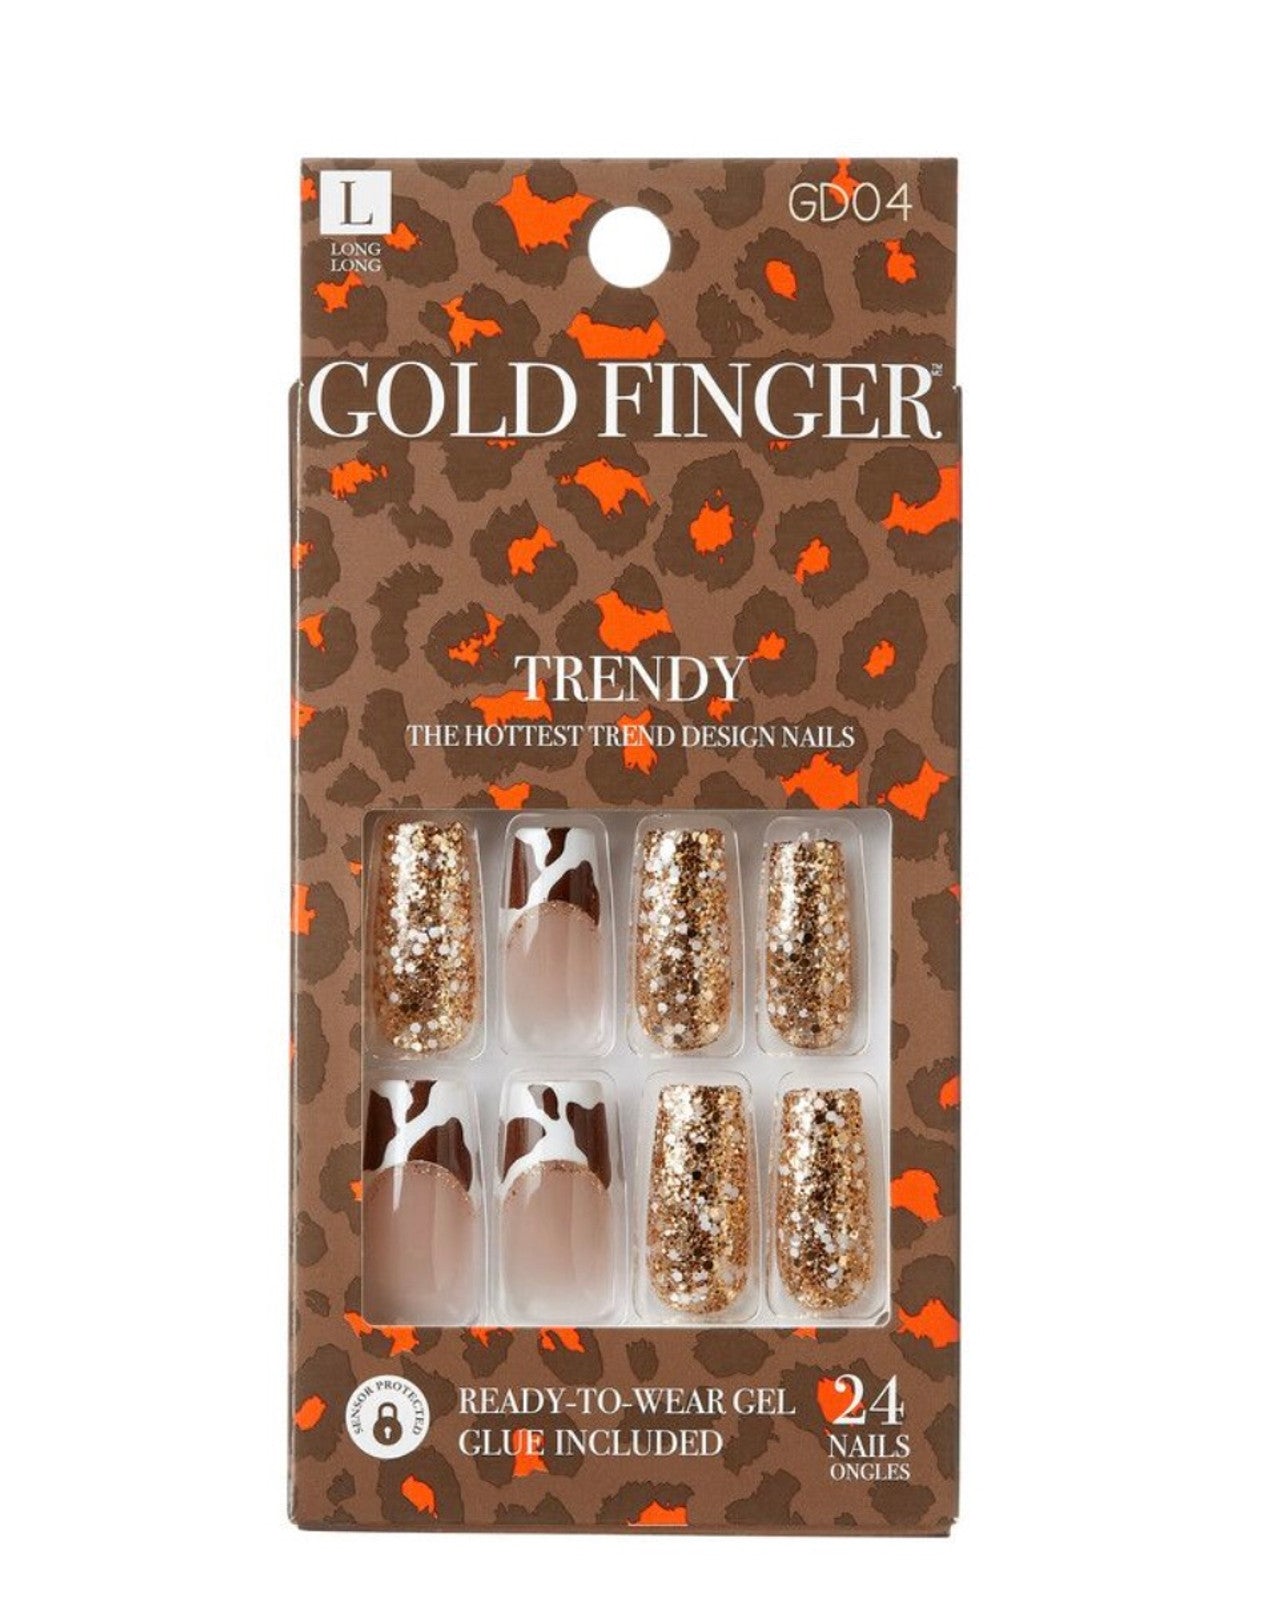 KISS Gold Finger Trendy Nails